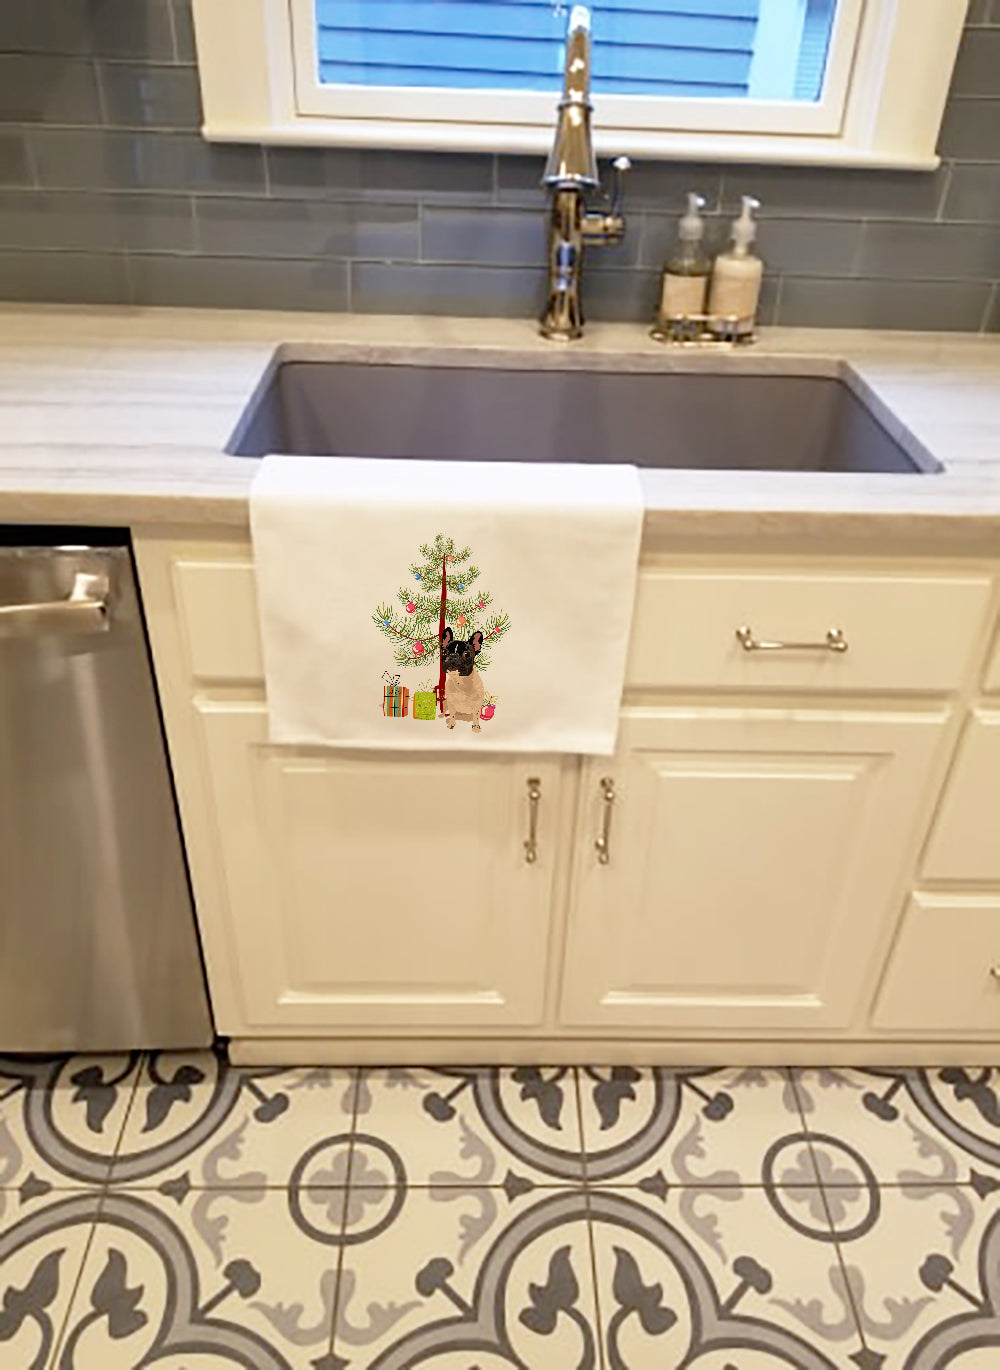 Buy this French Bulldog Fawn #3 Christmas White Kitchen Towel Set of 2